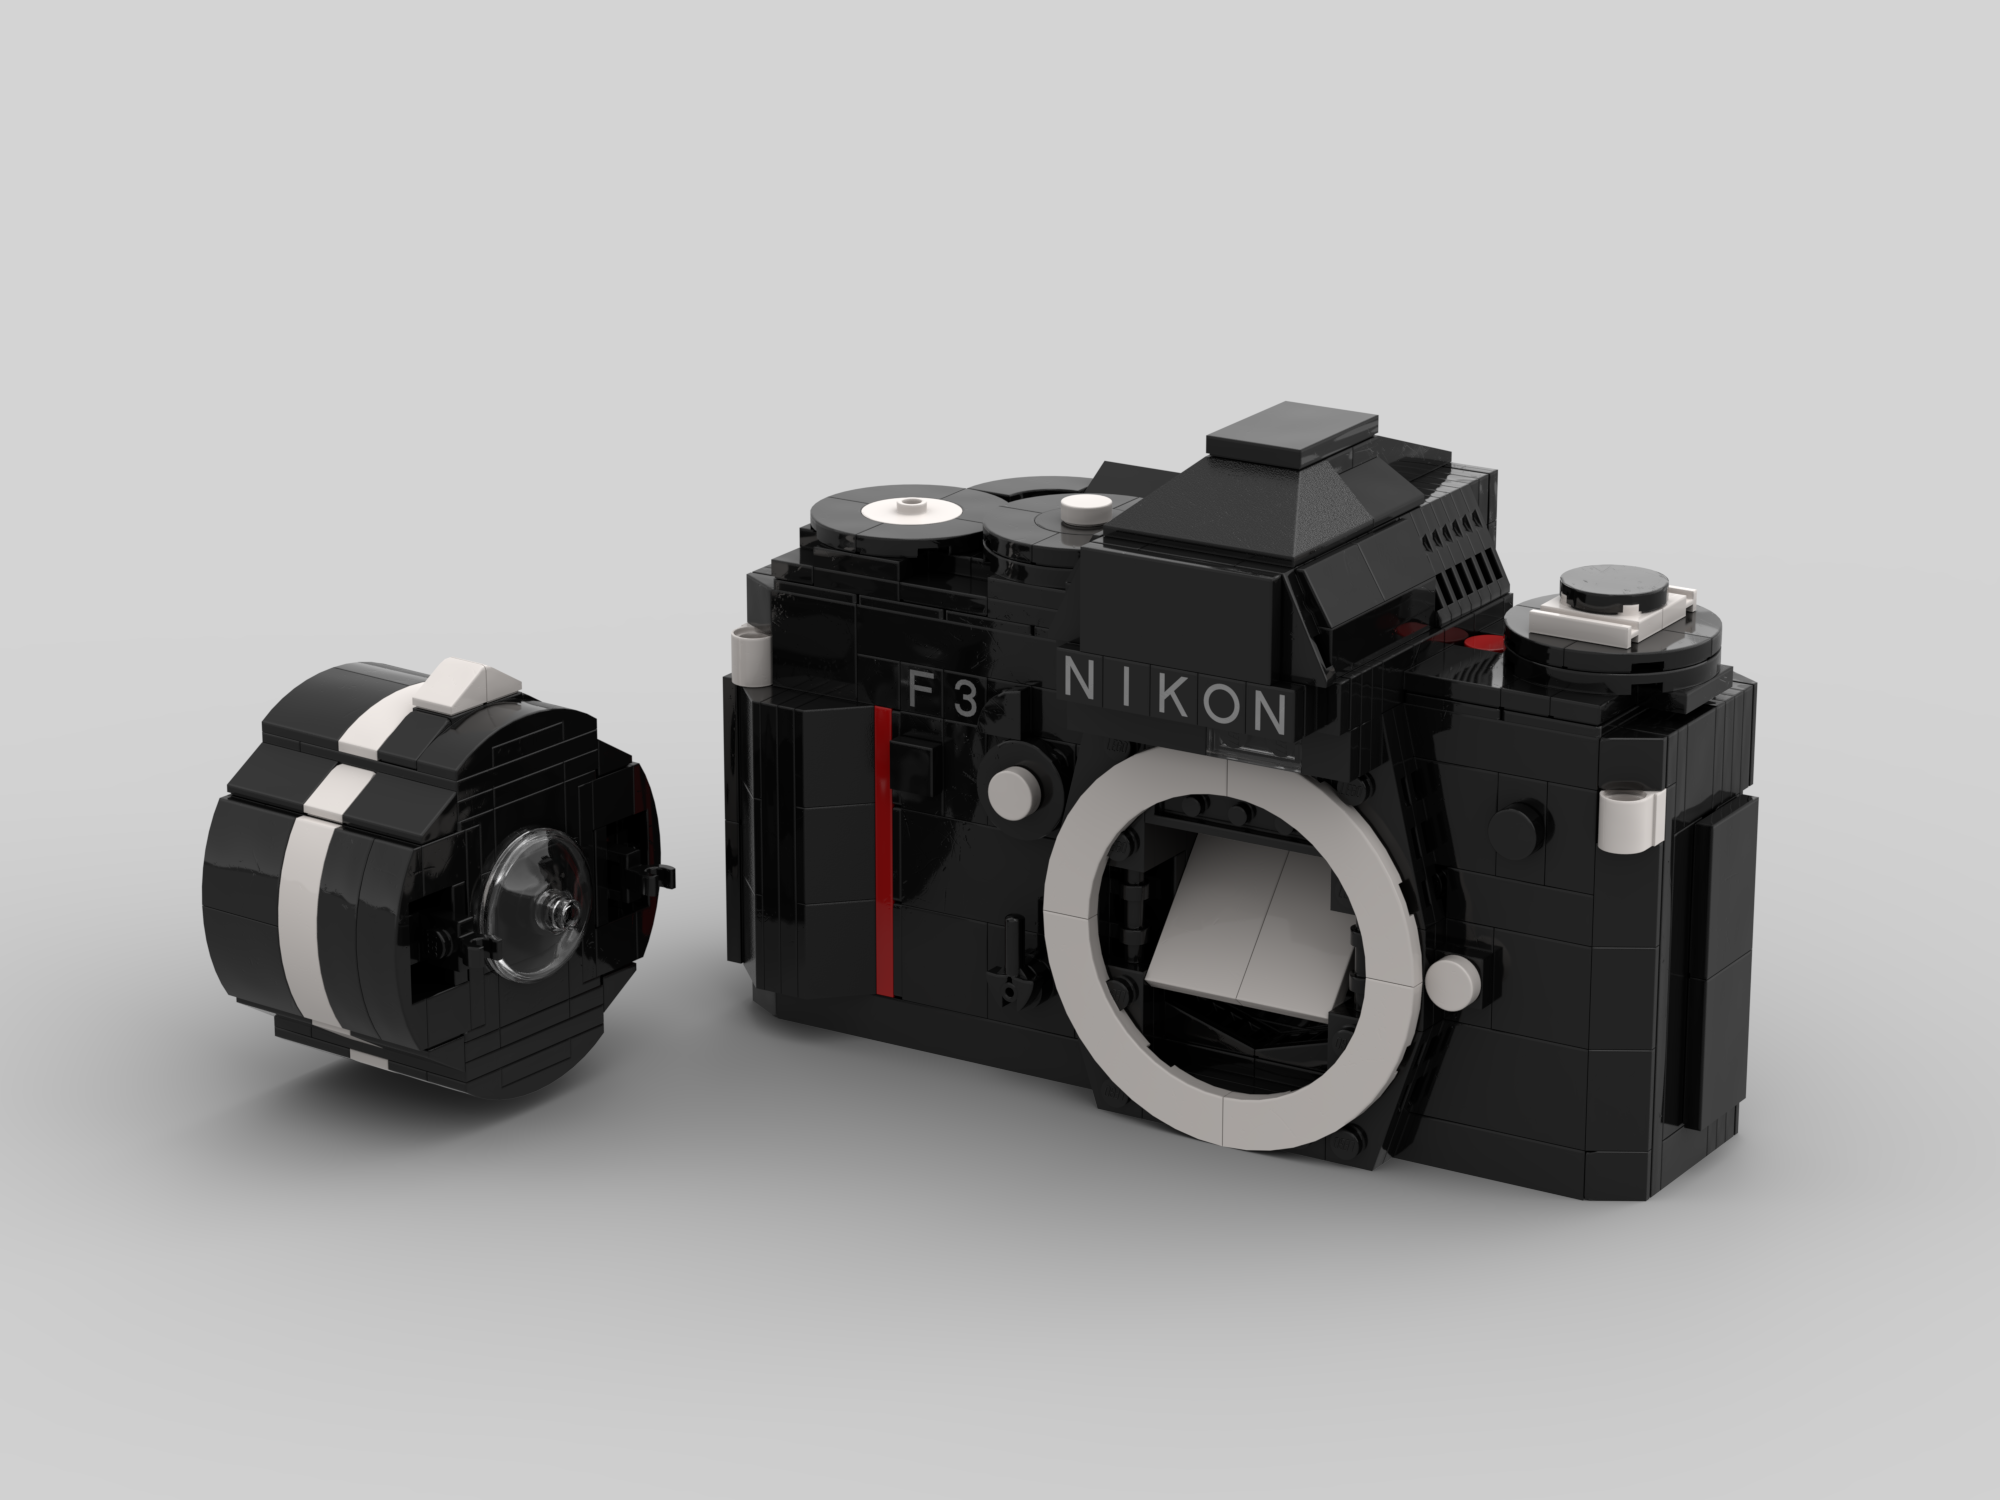 The Nikon F SLR Recreated with LEGO